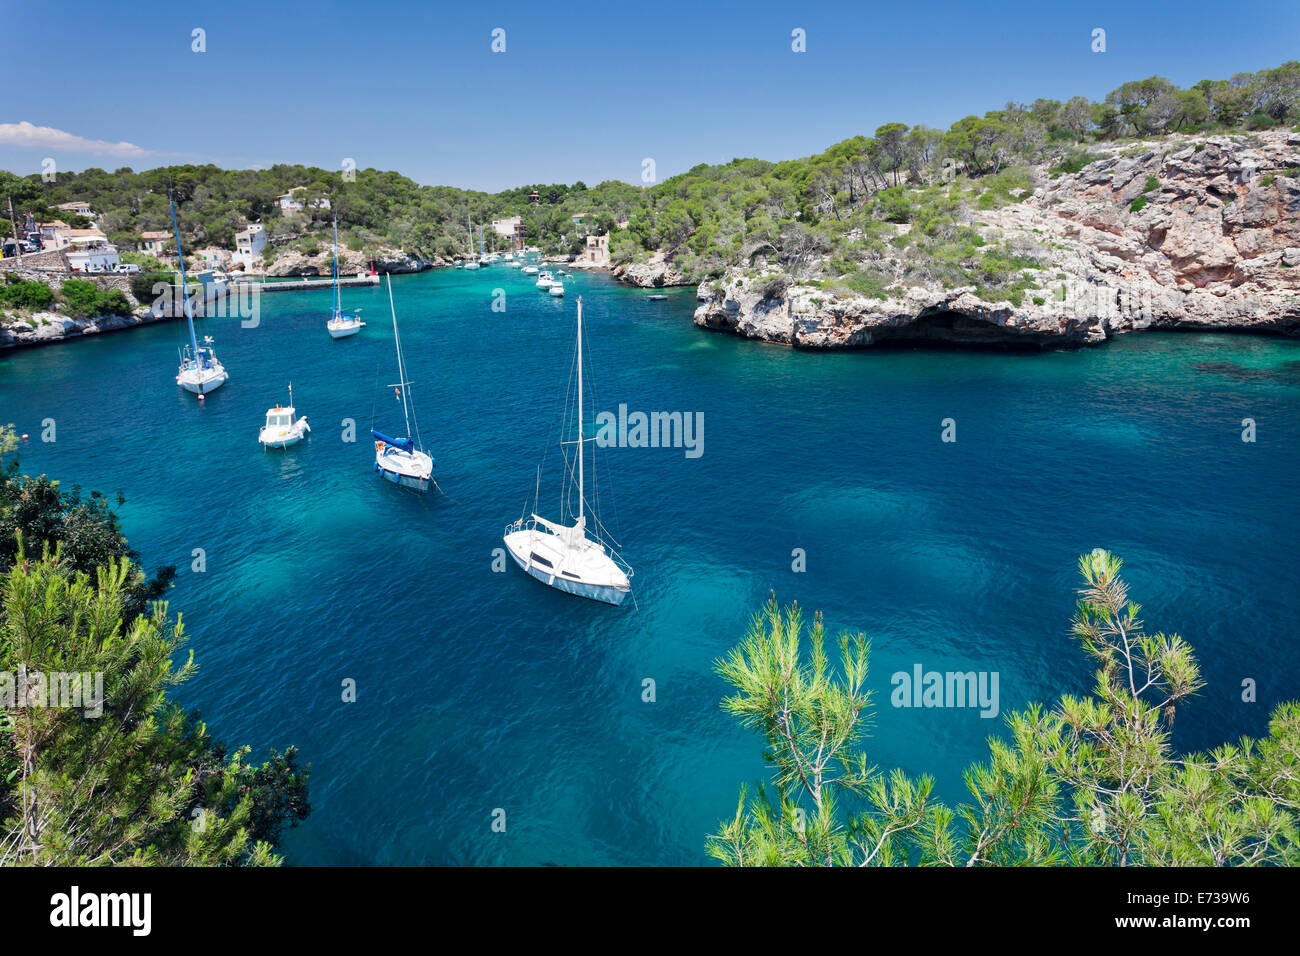 La baia di Cala Figuera di Maiorca (Mallorca), isole Baleari (Islas Baleares), Spagna, Mediterraneo, Europa Foto Stock